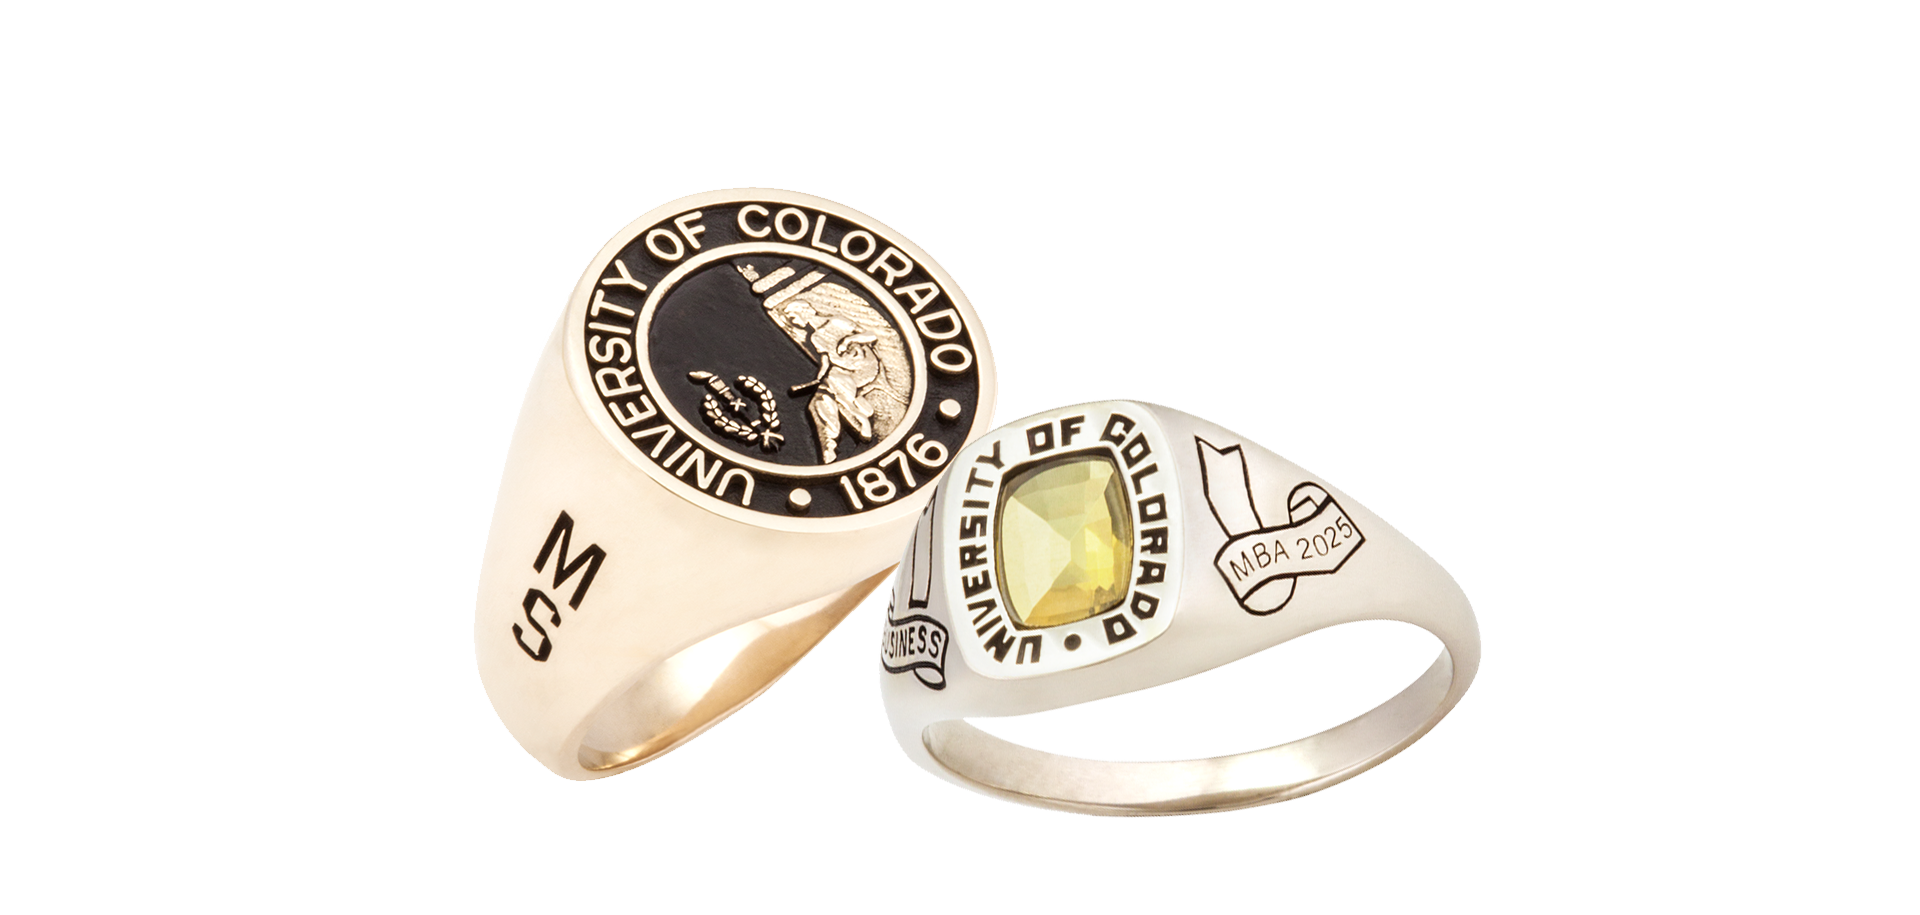 image of example University of Colorado Denver rings